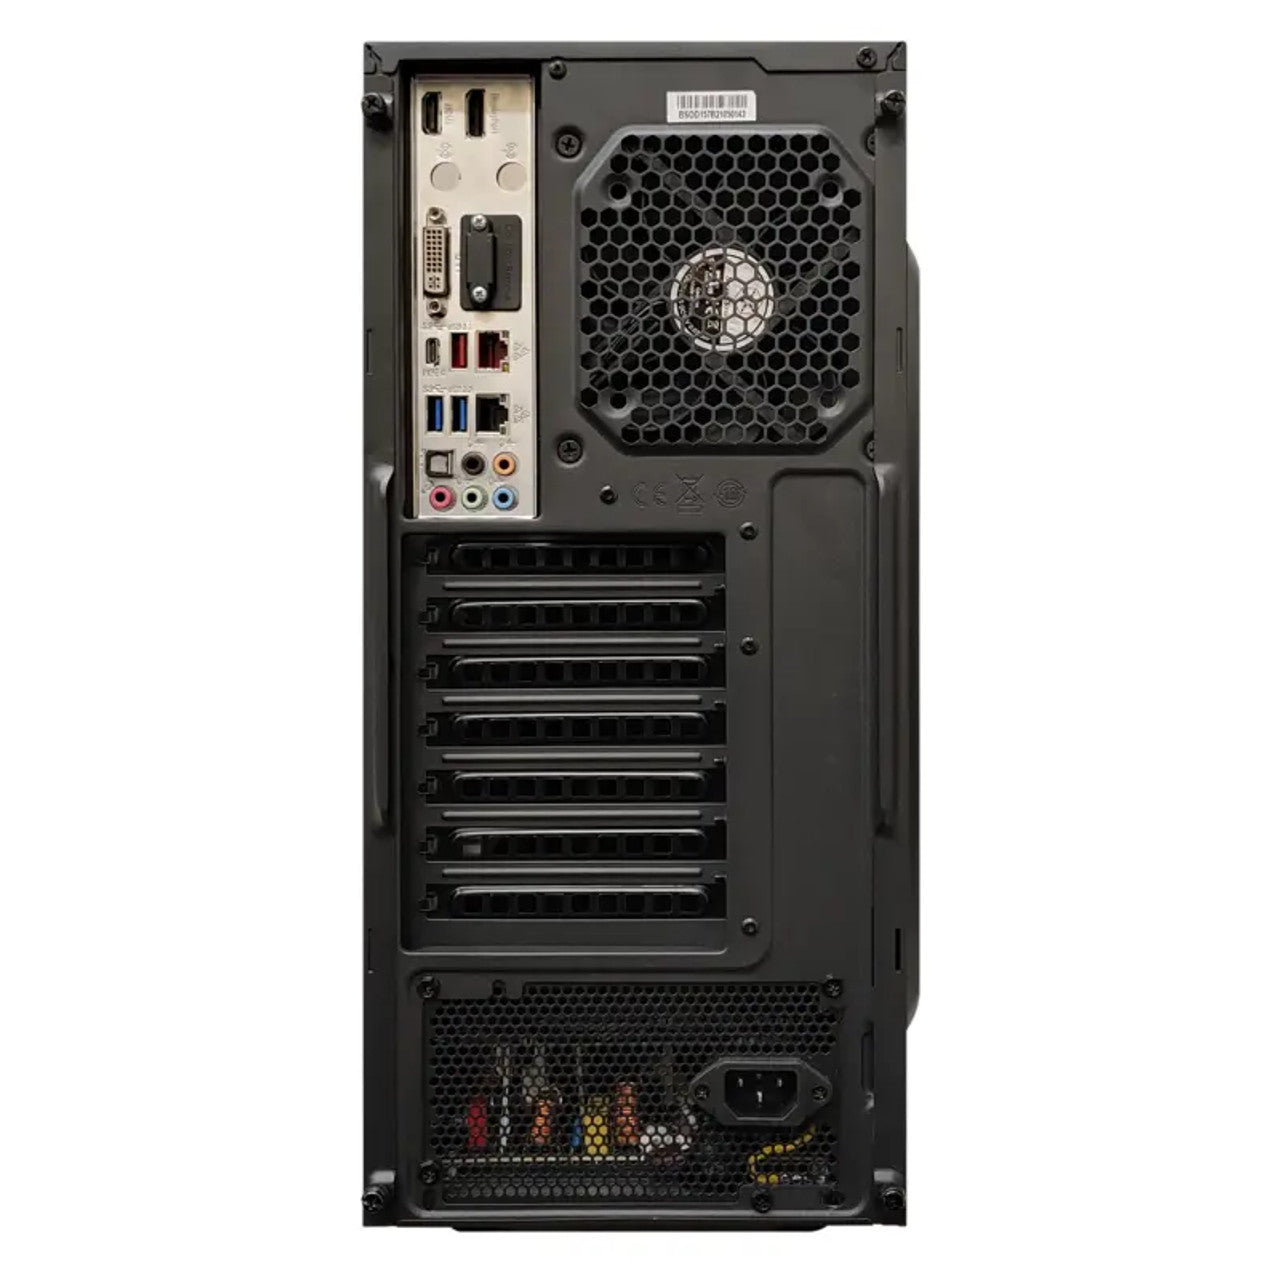 Digital Watchdog DW-BJT7120T Blackjack Tower server with Intel Core i7 processor, 20TB Storage; NVR